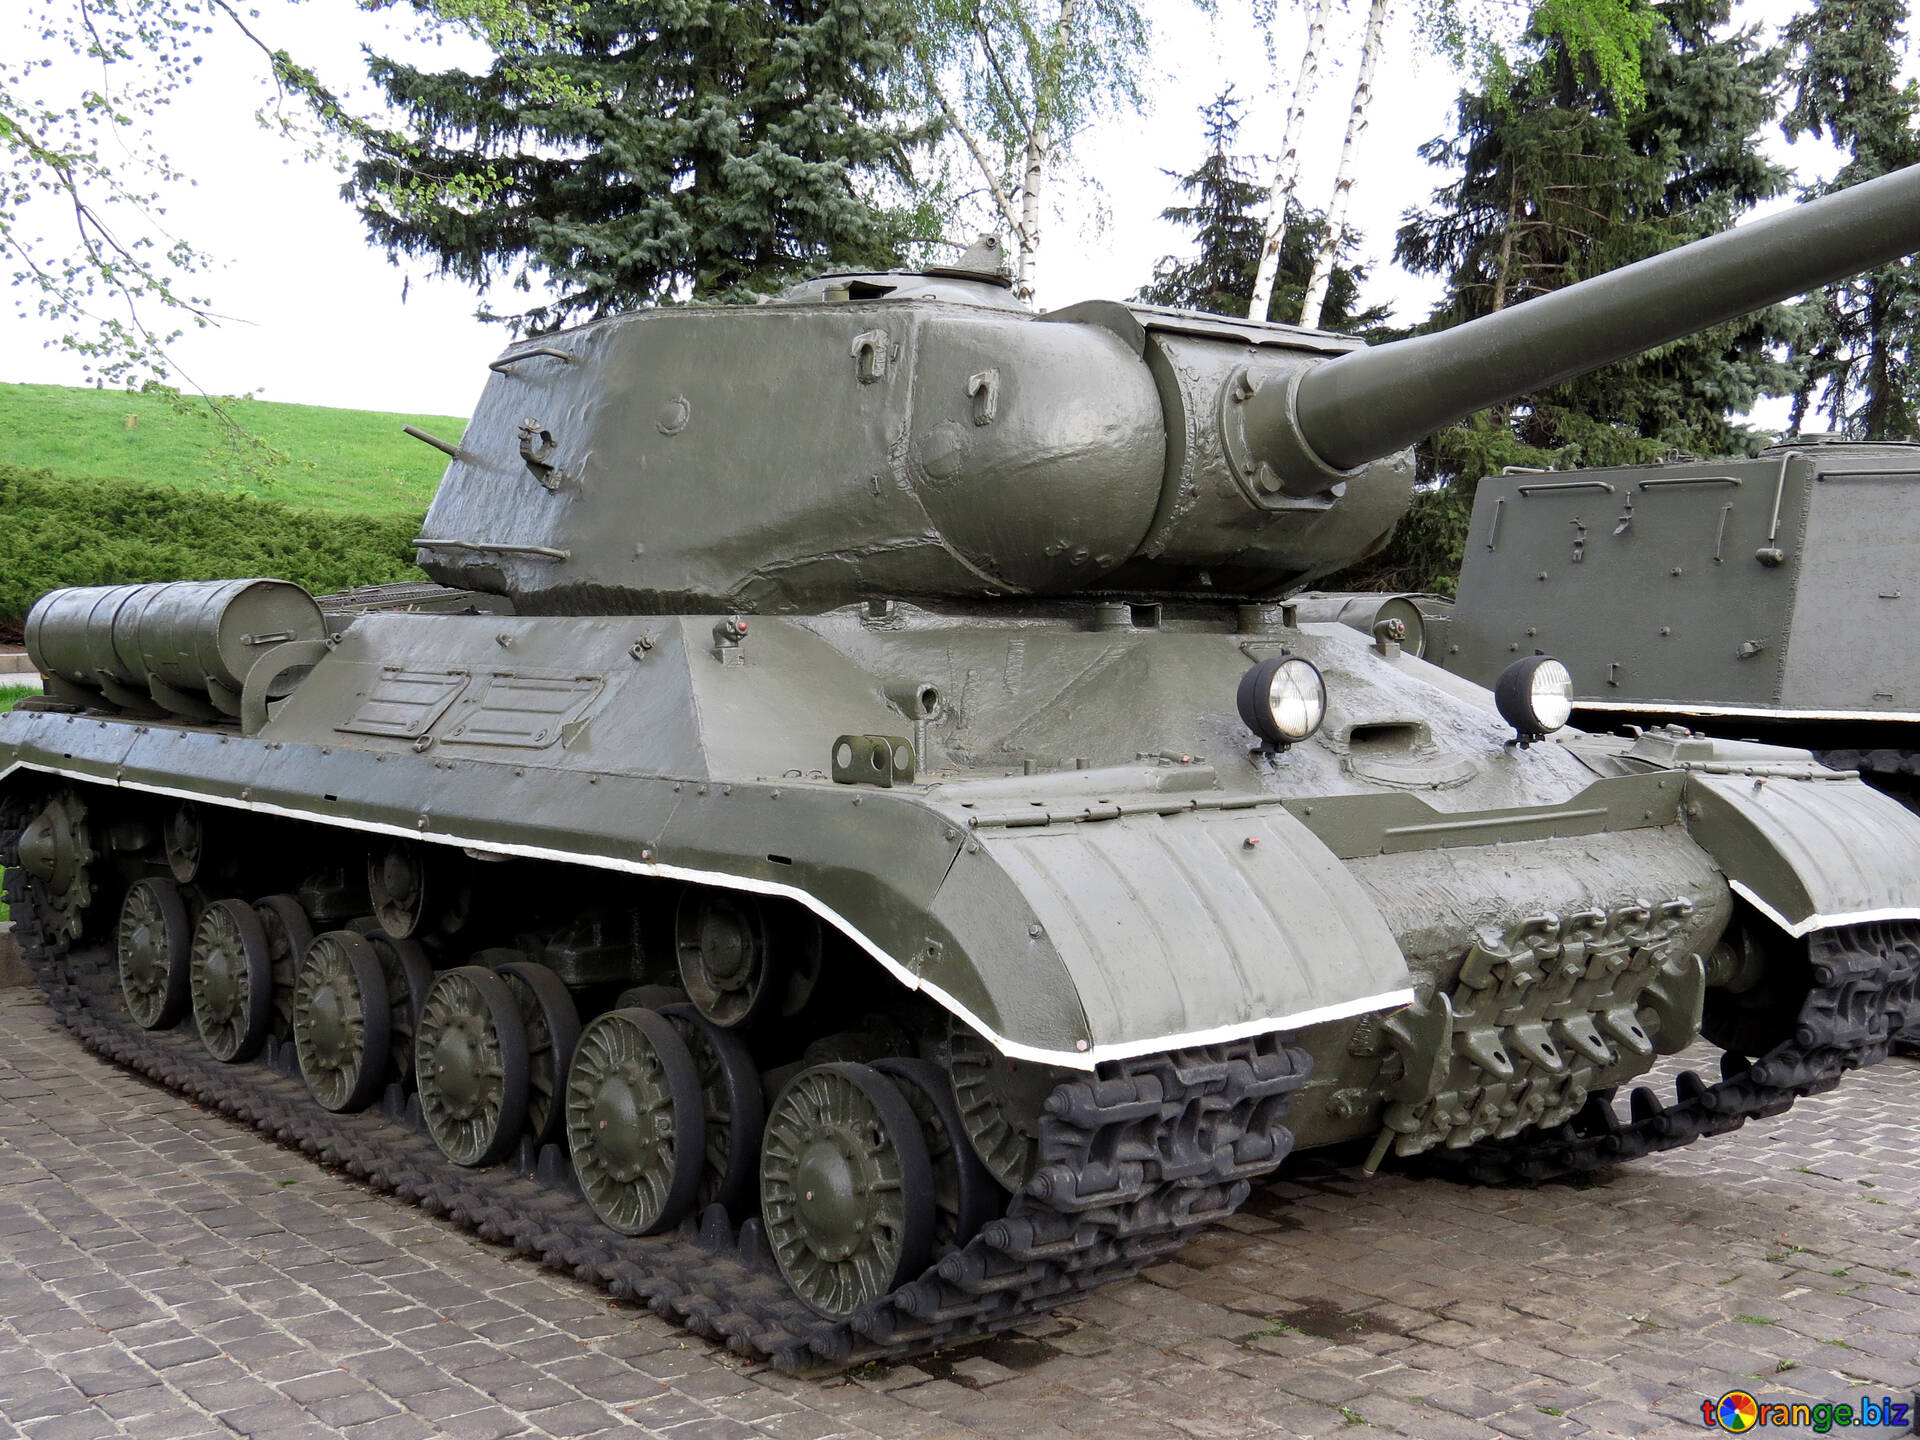 Tanks Image Soviet Tank Is 1 Image Weapons № 30701. Torange.biz Free Pics On Cc By License